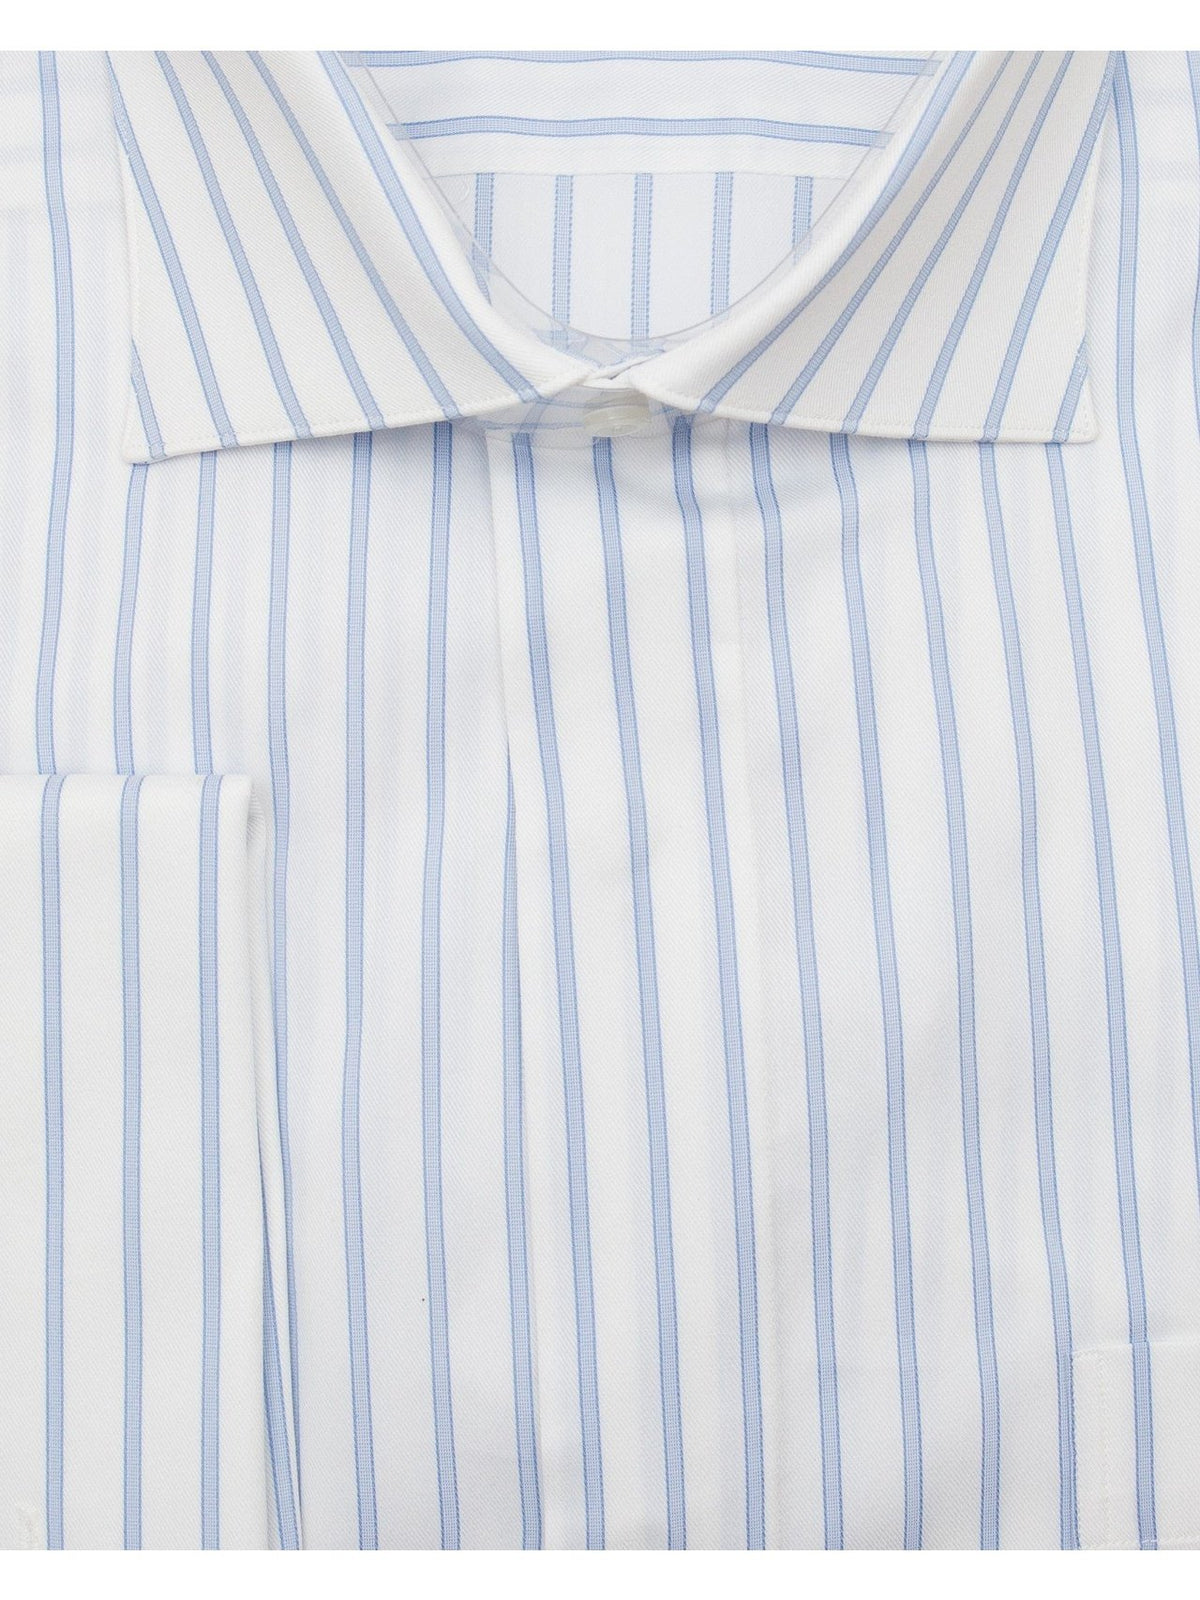 Brand M SHIRTS Mens Cotton Blue Striped Classic Fit Cutaway Collar Stretch Dress Shirt